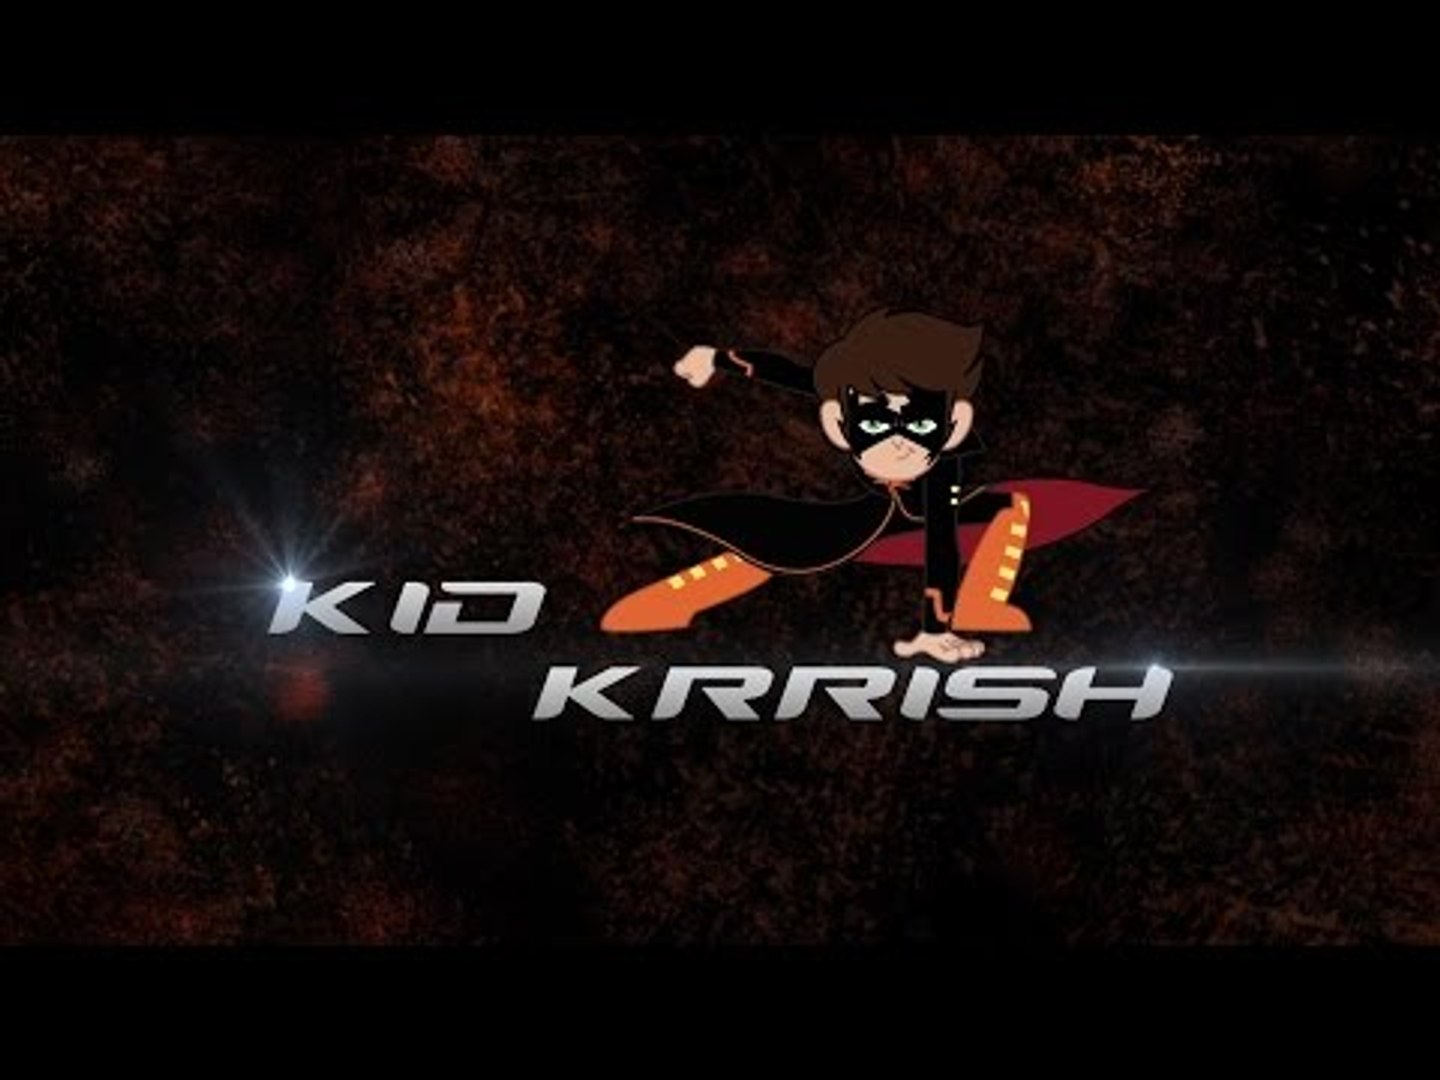 Kid krrish full movie in hindi download